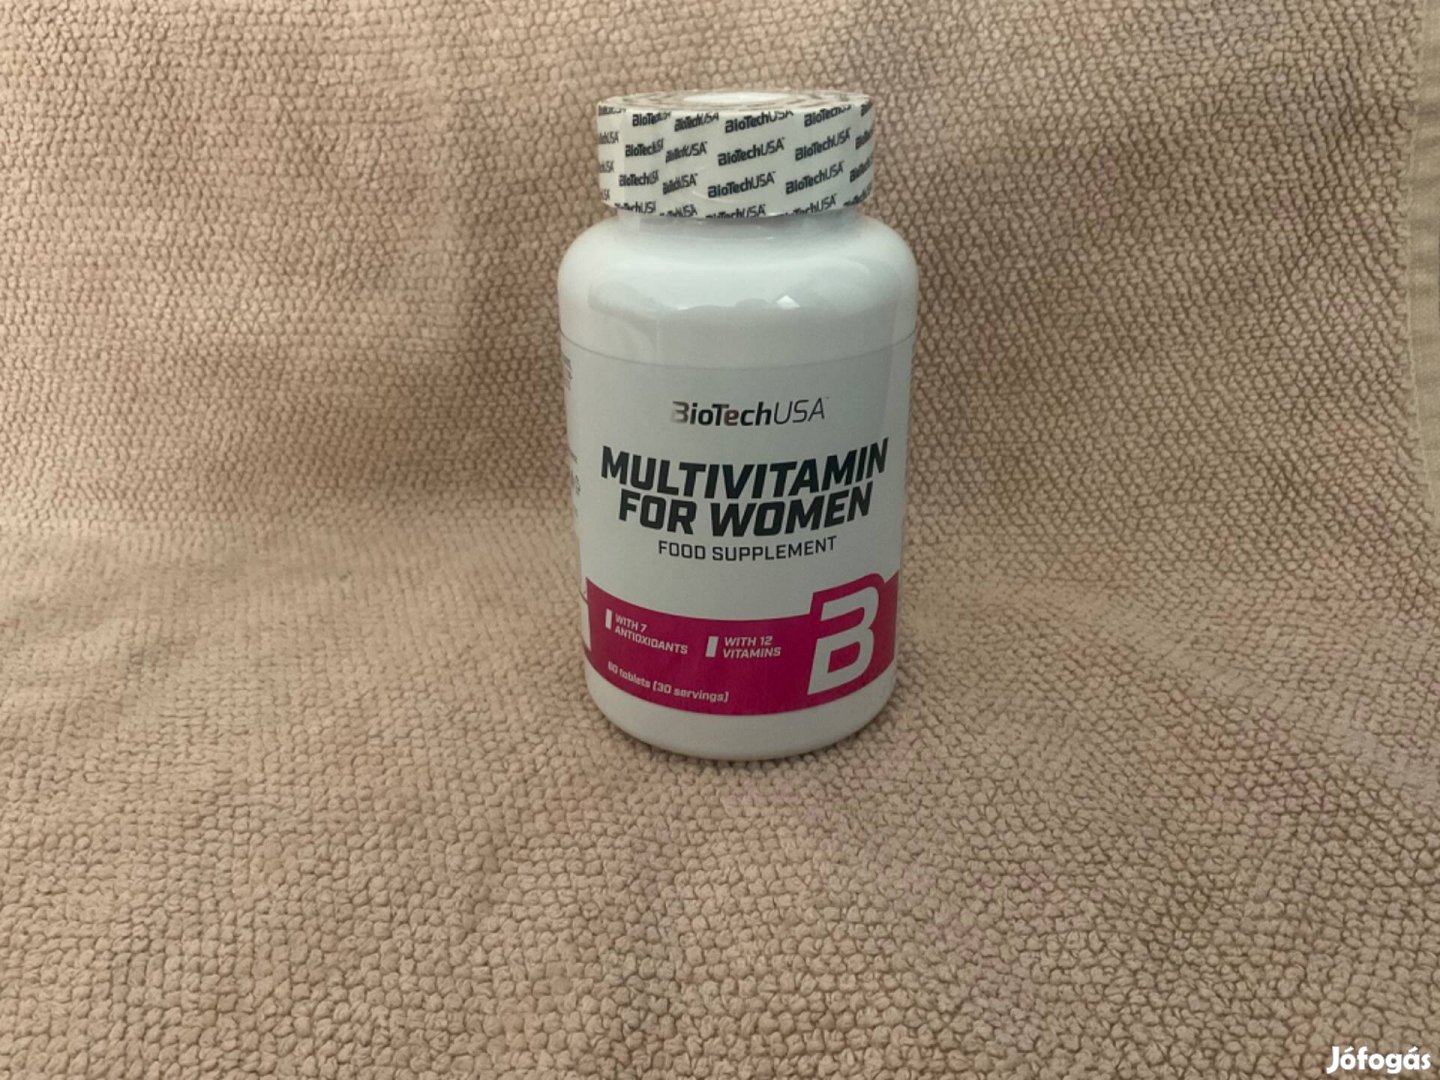 Multivitamin for women Biotechusa